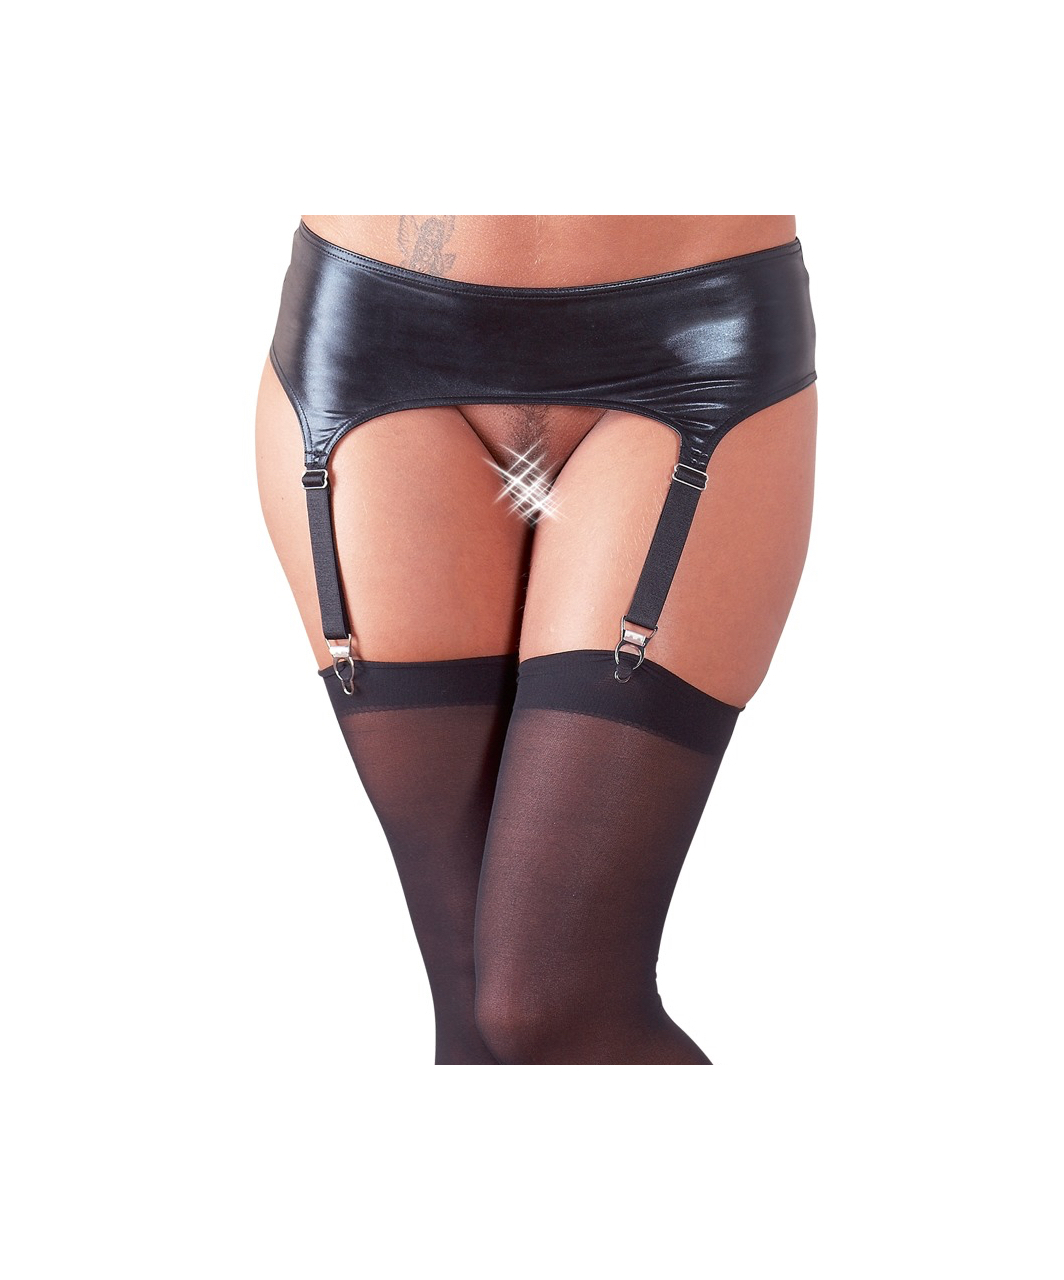 NO:XQSE black matte look garter belt with stockings